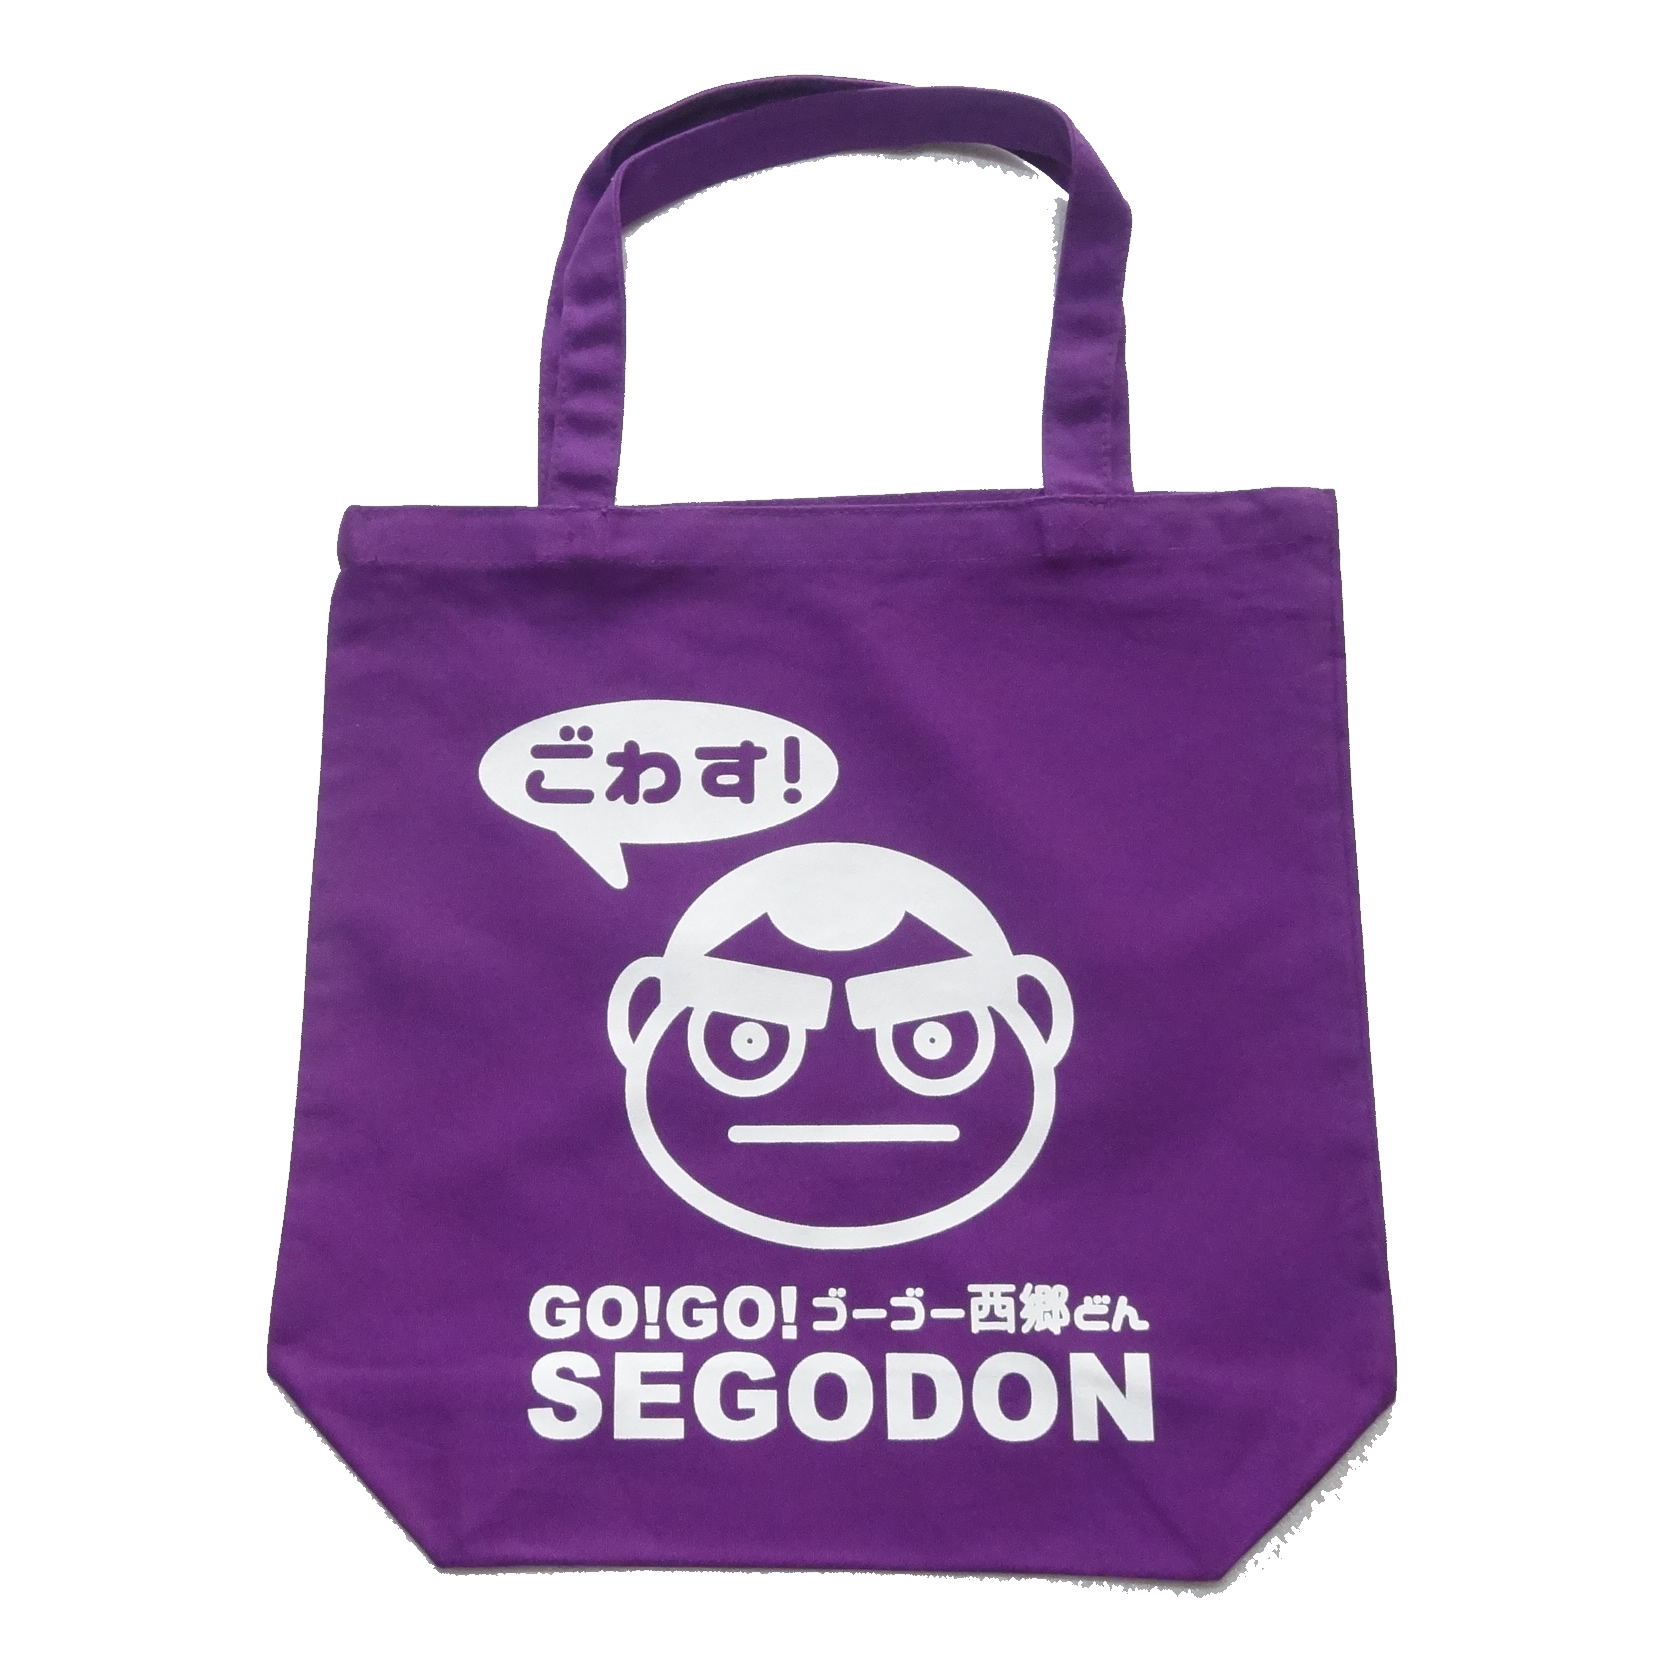 【GO!GO! SEGODON】 エコバッグ (手提げ・トート) おごじょパープル